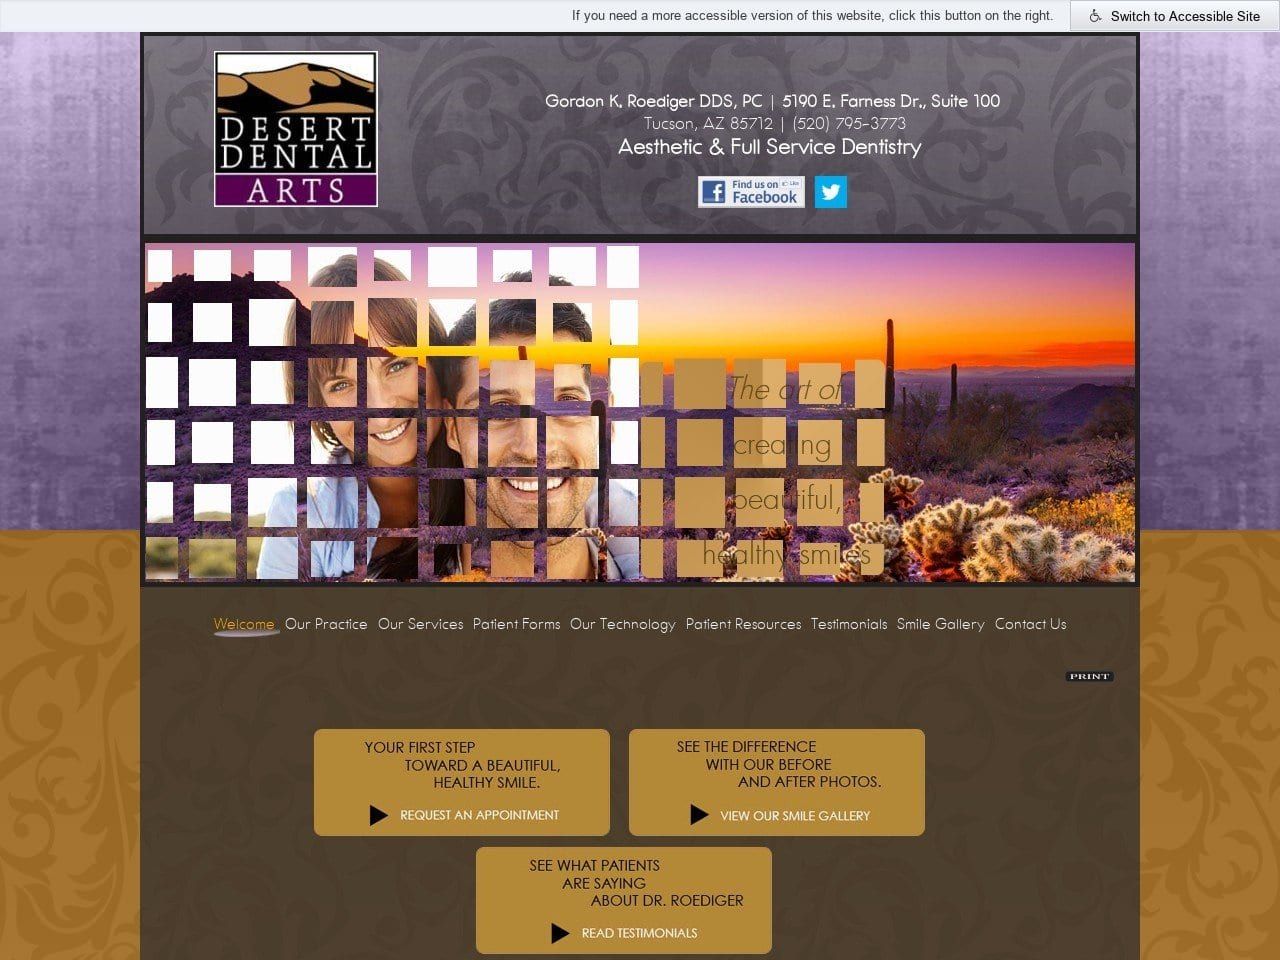 Desert Dental Arts Website Screenshot from desertdentalarts.com